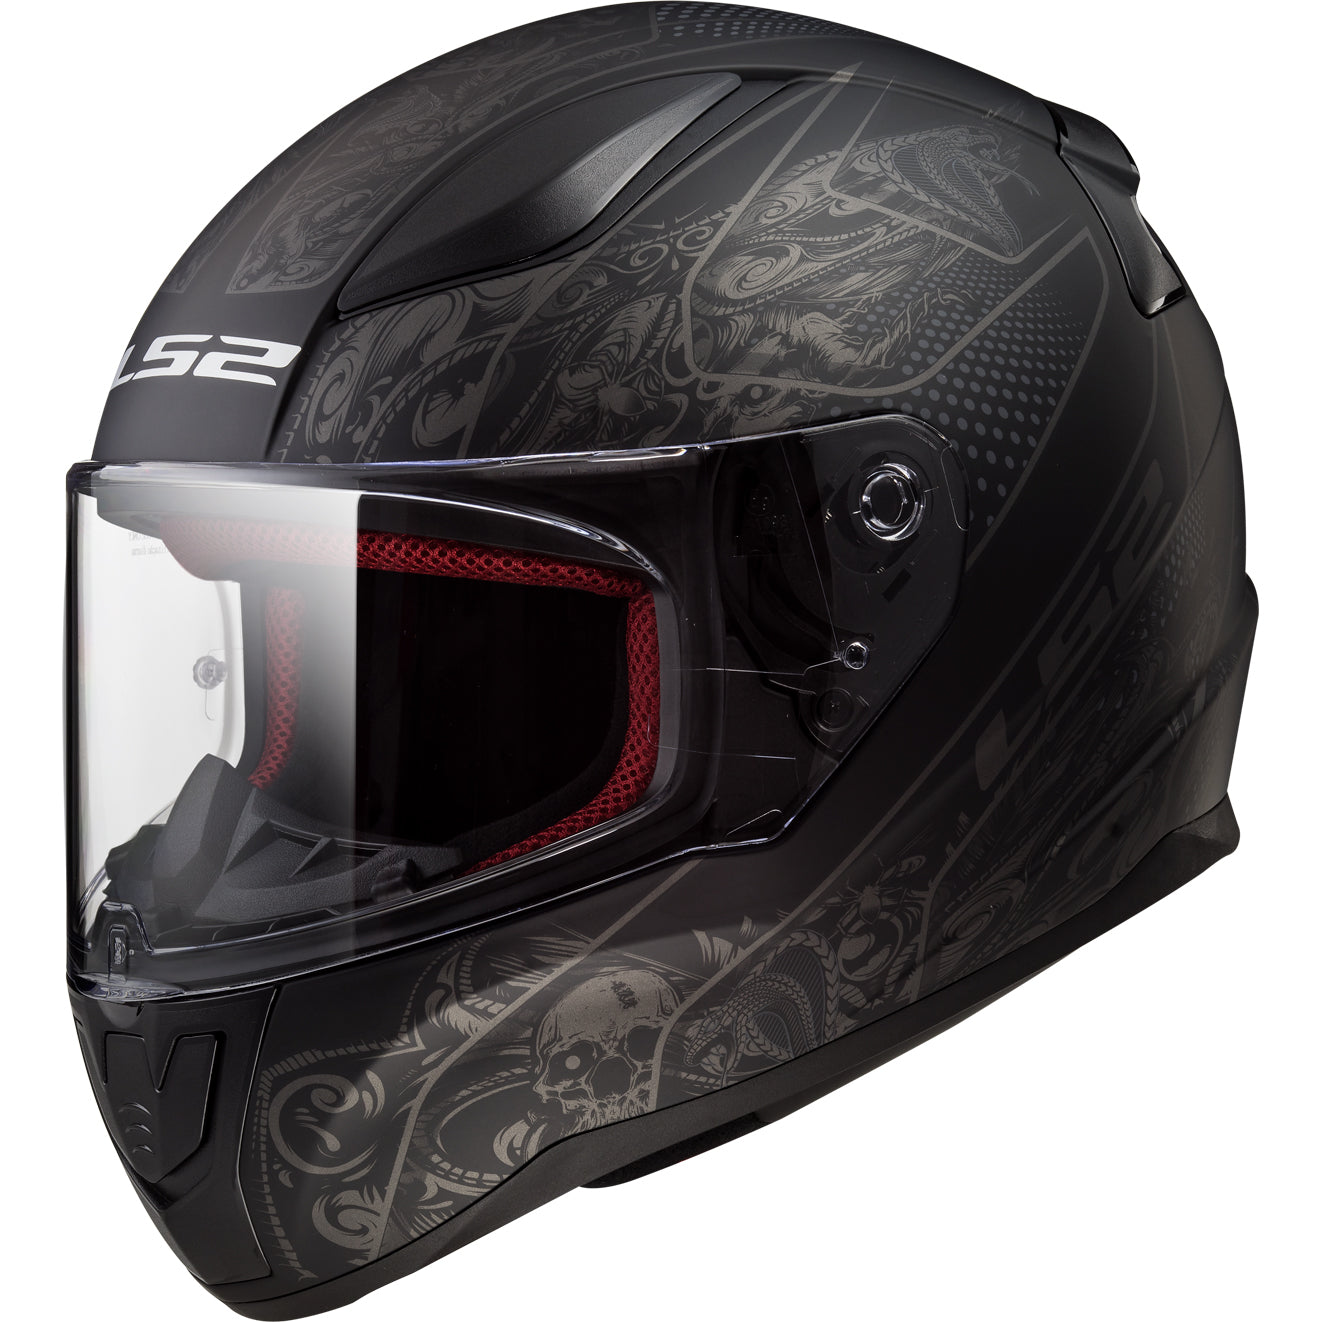 LS2 Helmets Rapid Crypt Motorcycle Full Face Helmet